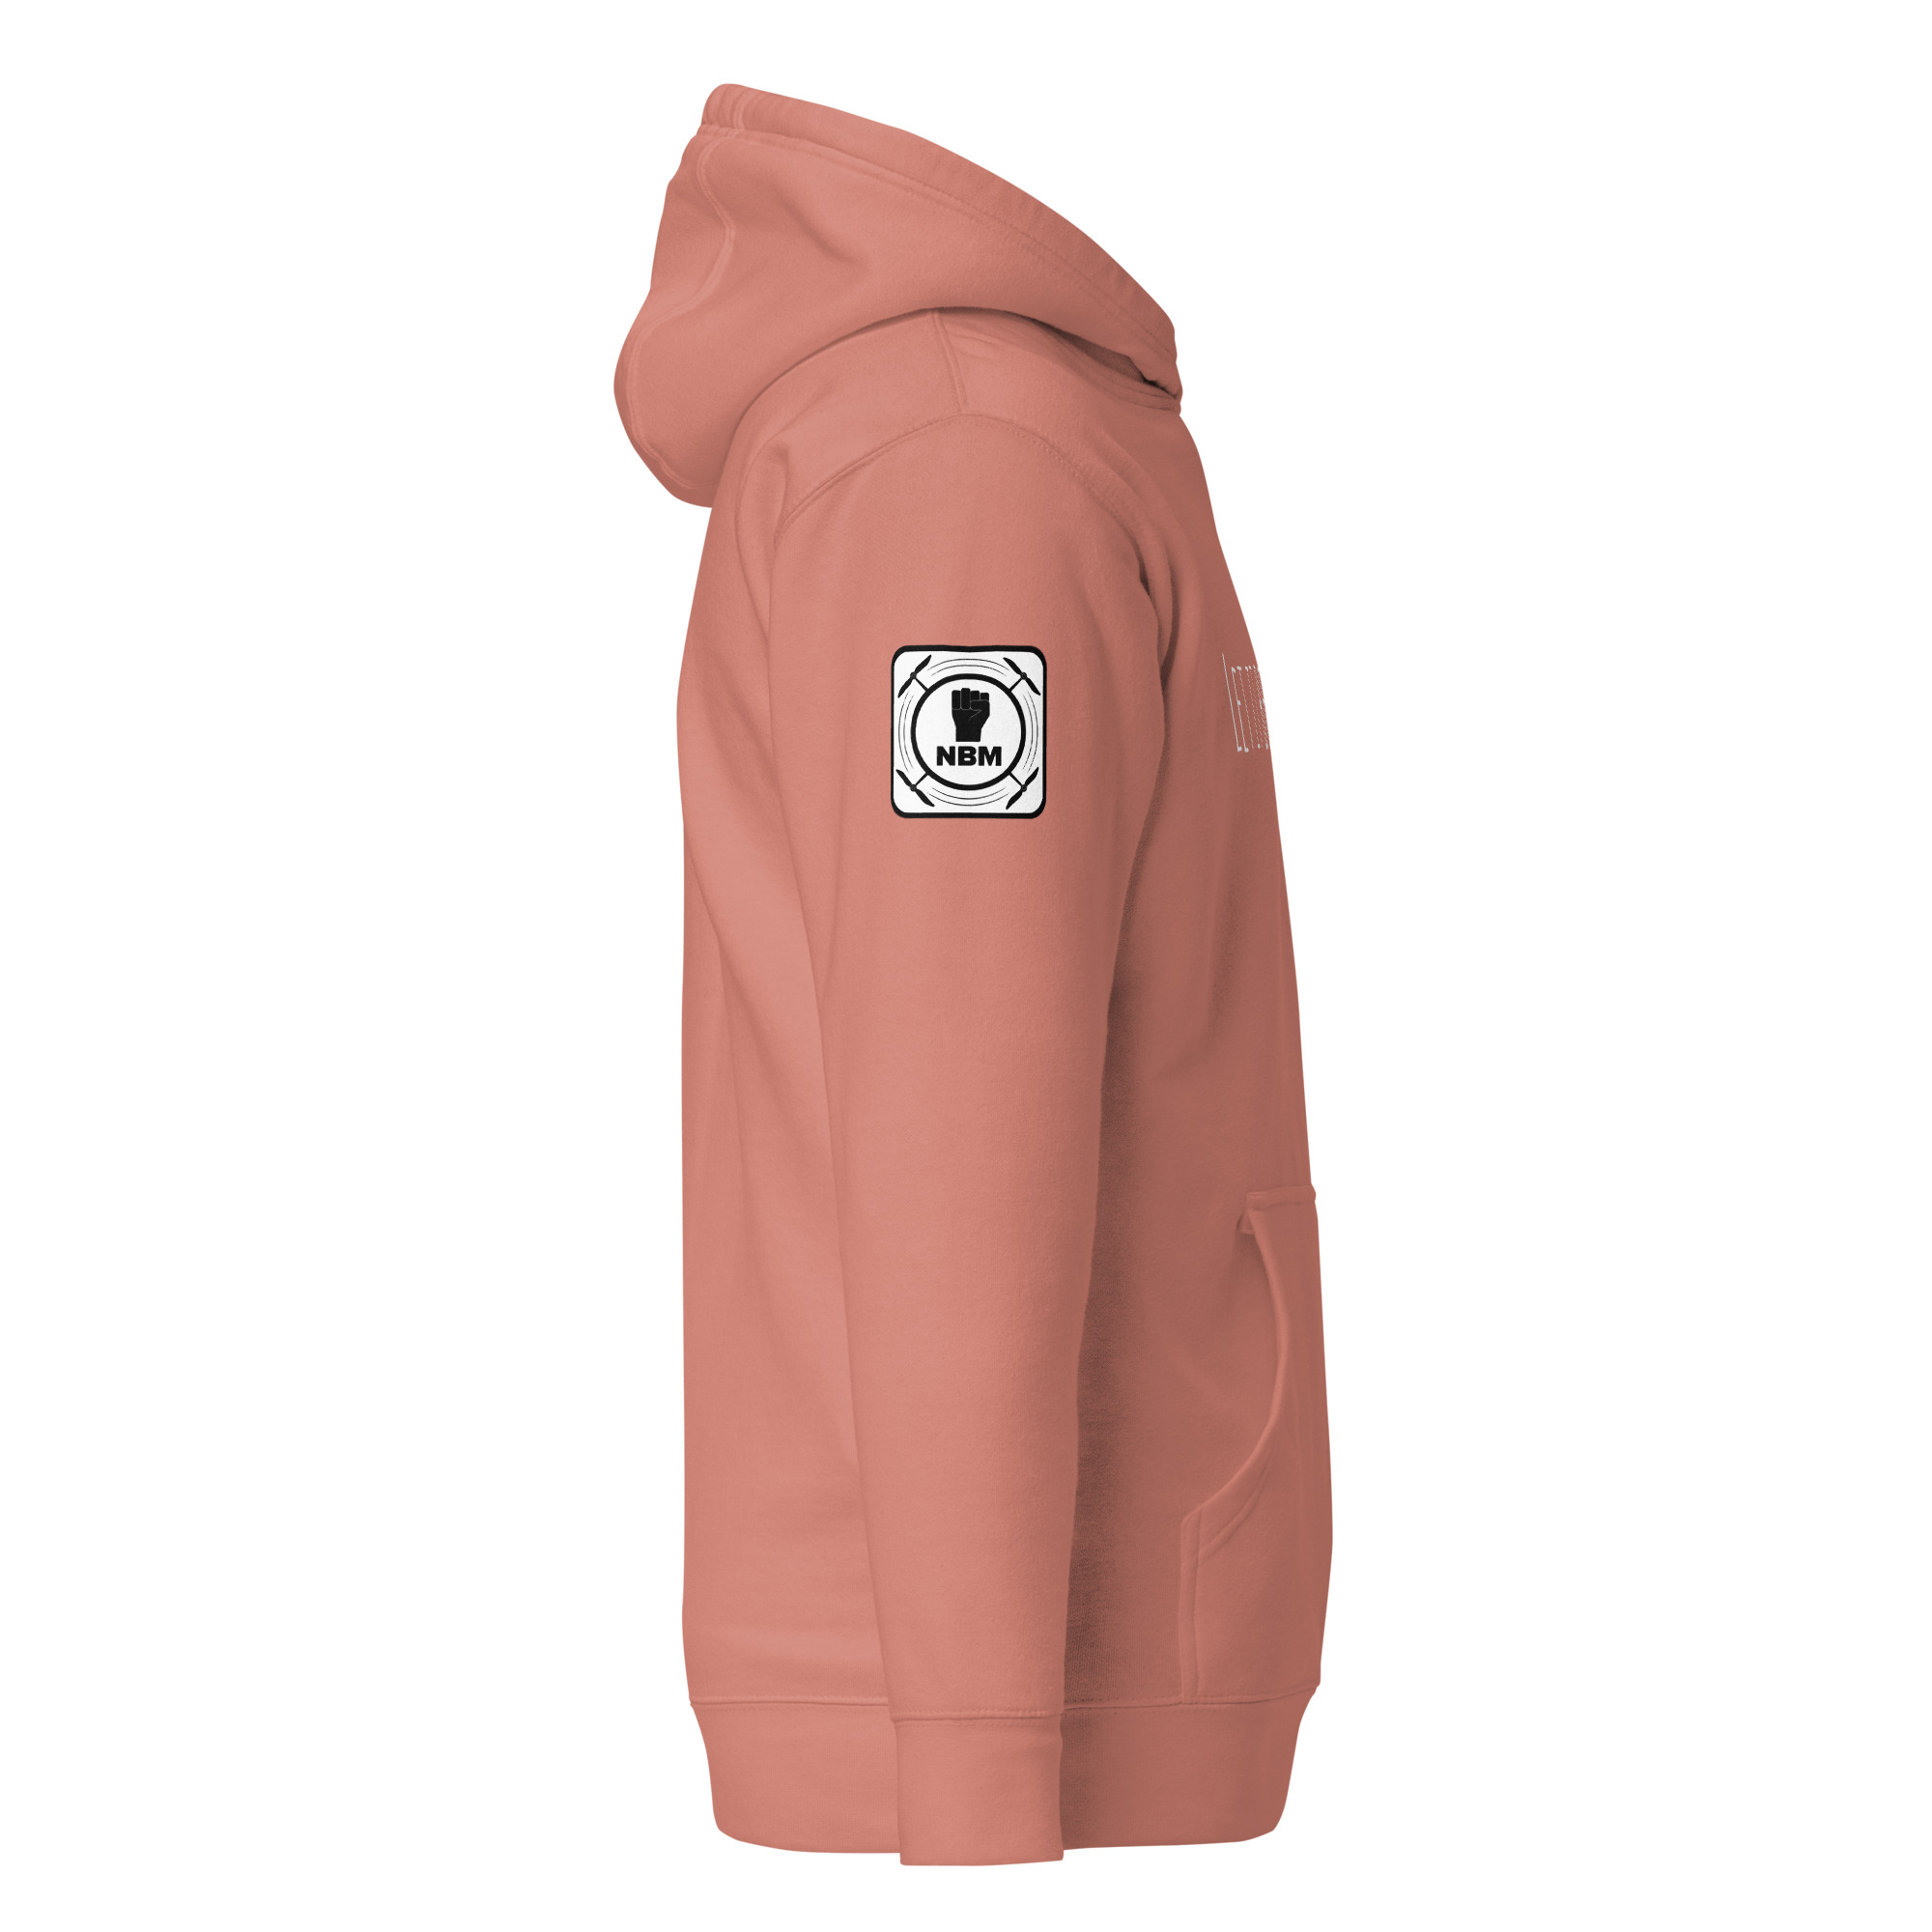 unisex-premium-hoodie-dusty-rose-right-65a01b43d2d91.jpg